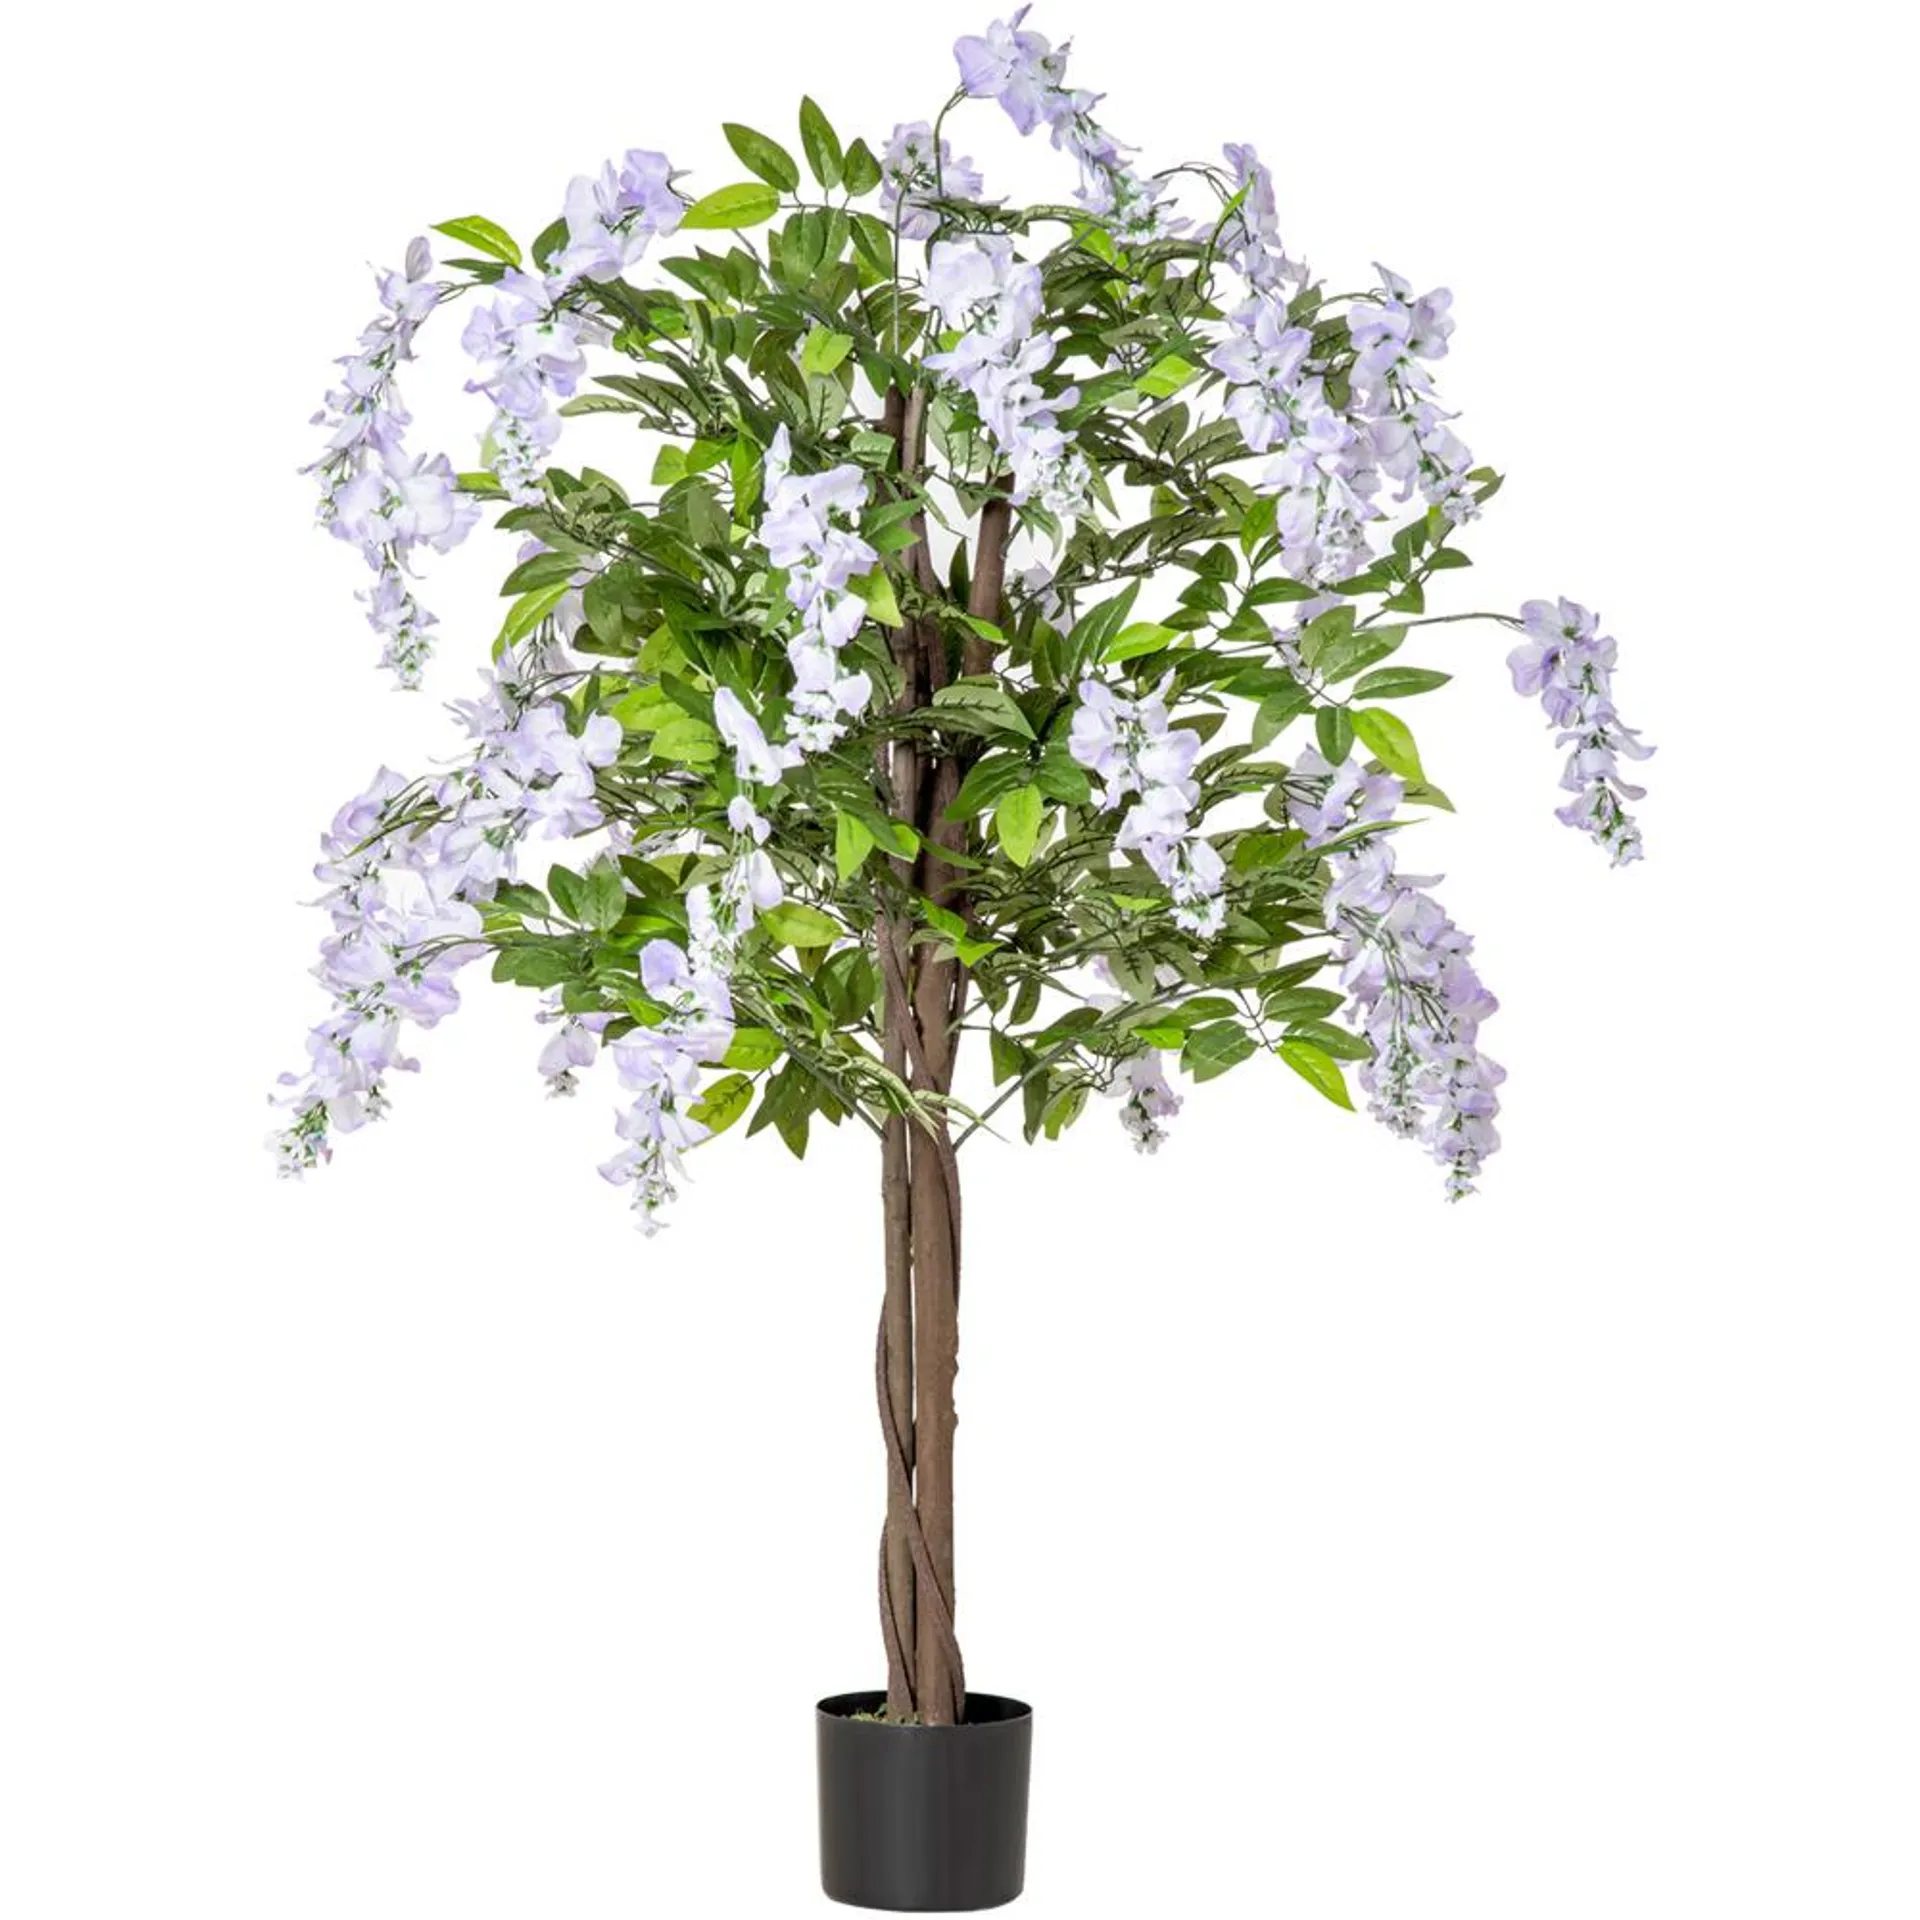 Portland Liliac Flowers Wisteria Tree Artificial Plant In Pot 3.6ft